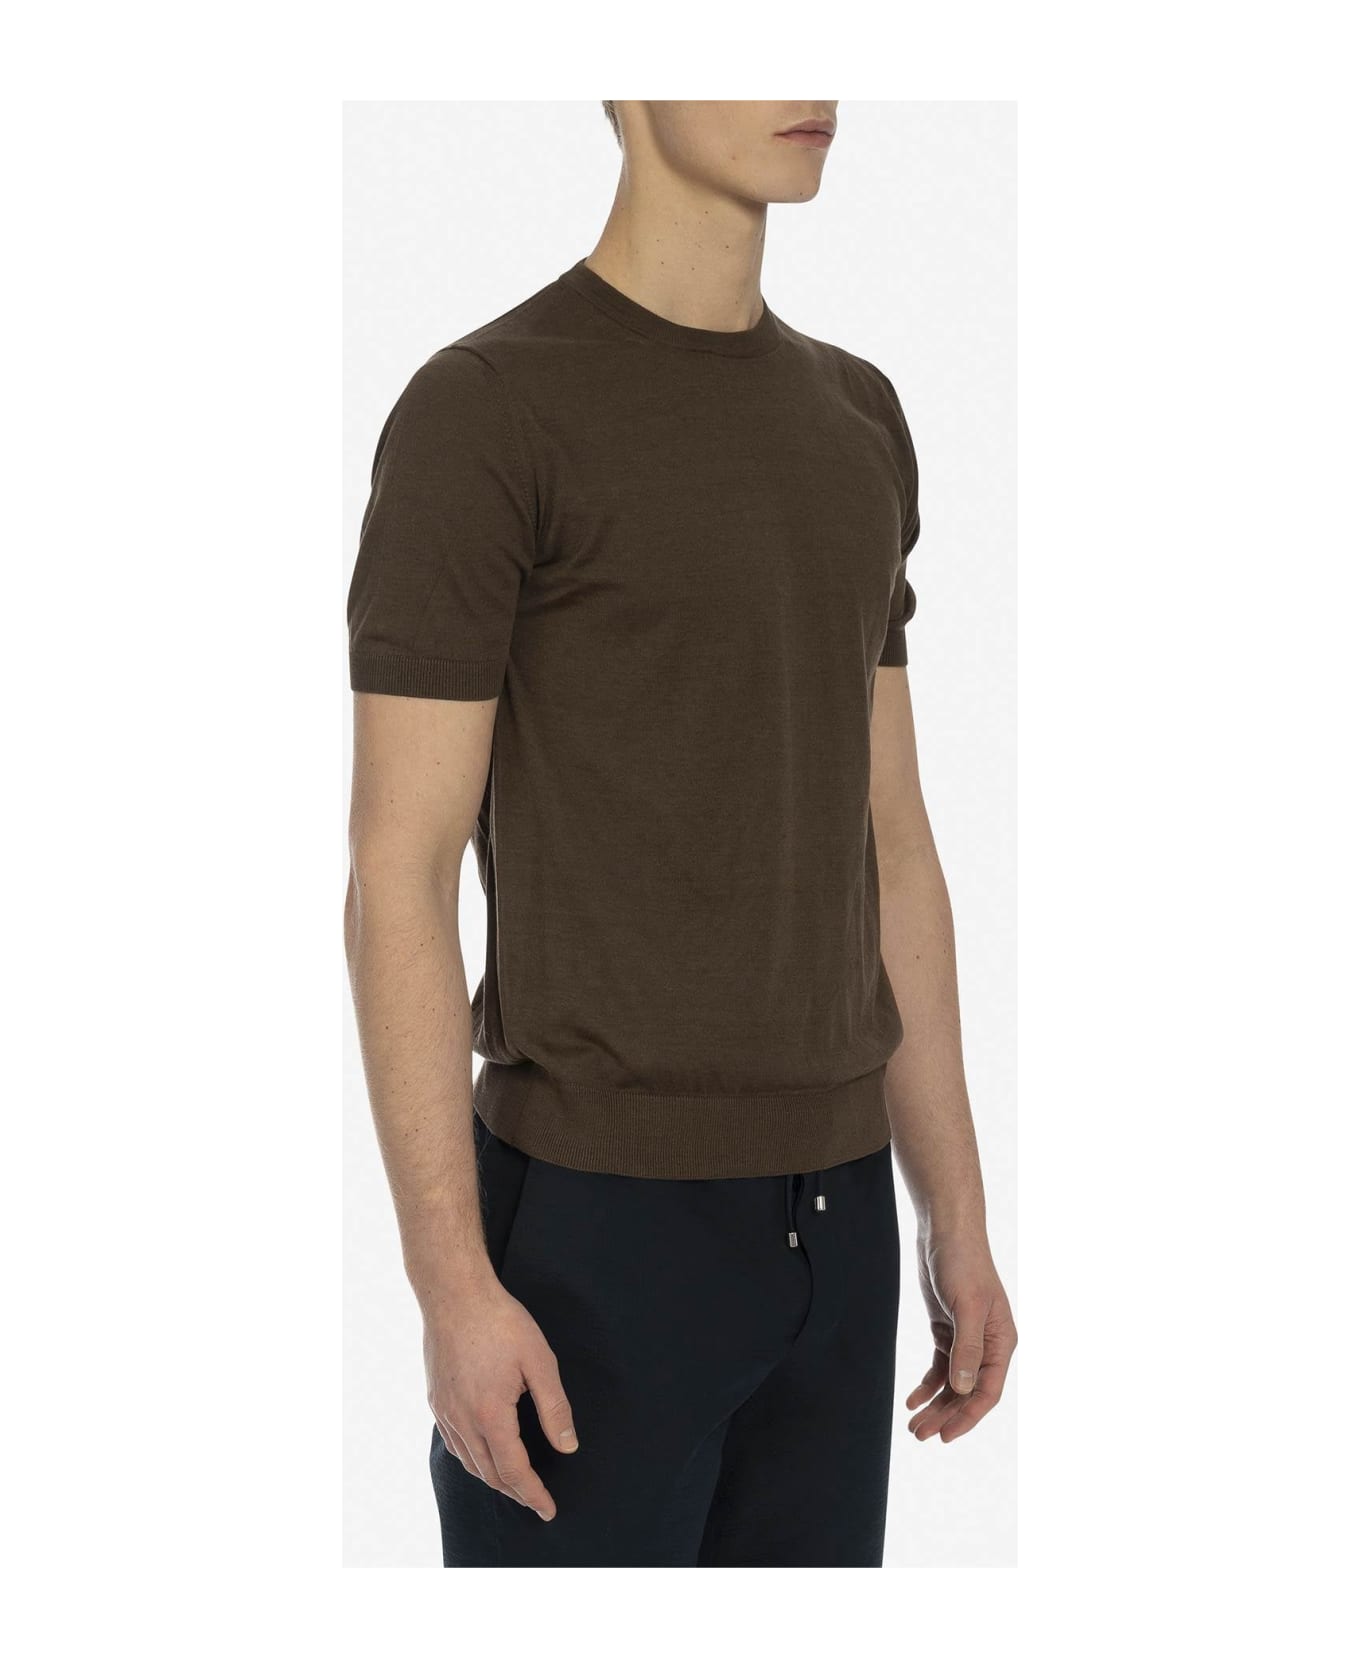 Larusmiani 'roquebrune' Crewneck Sweater - Brown シャツ